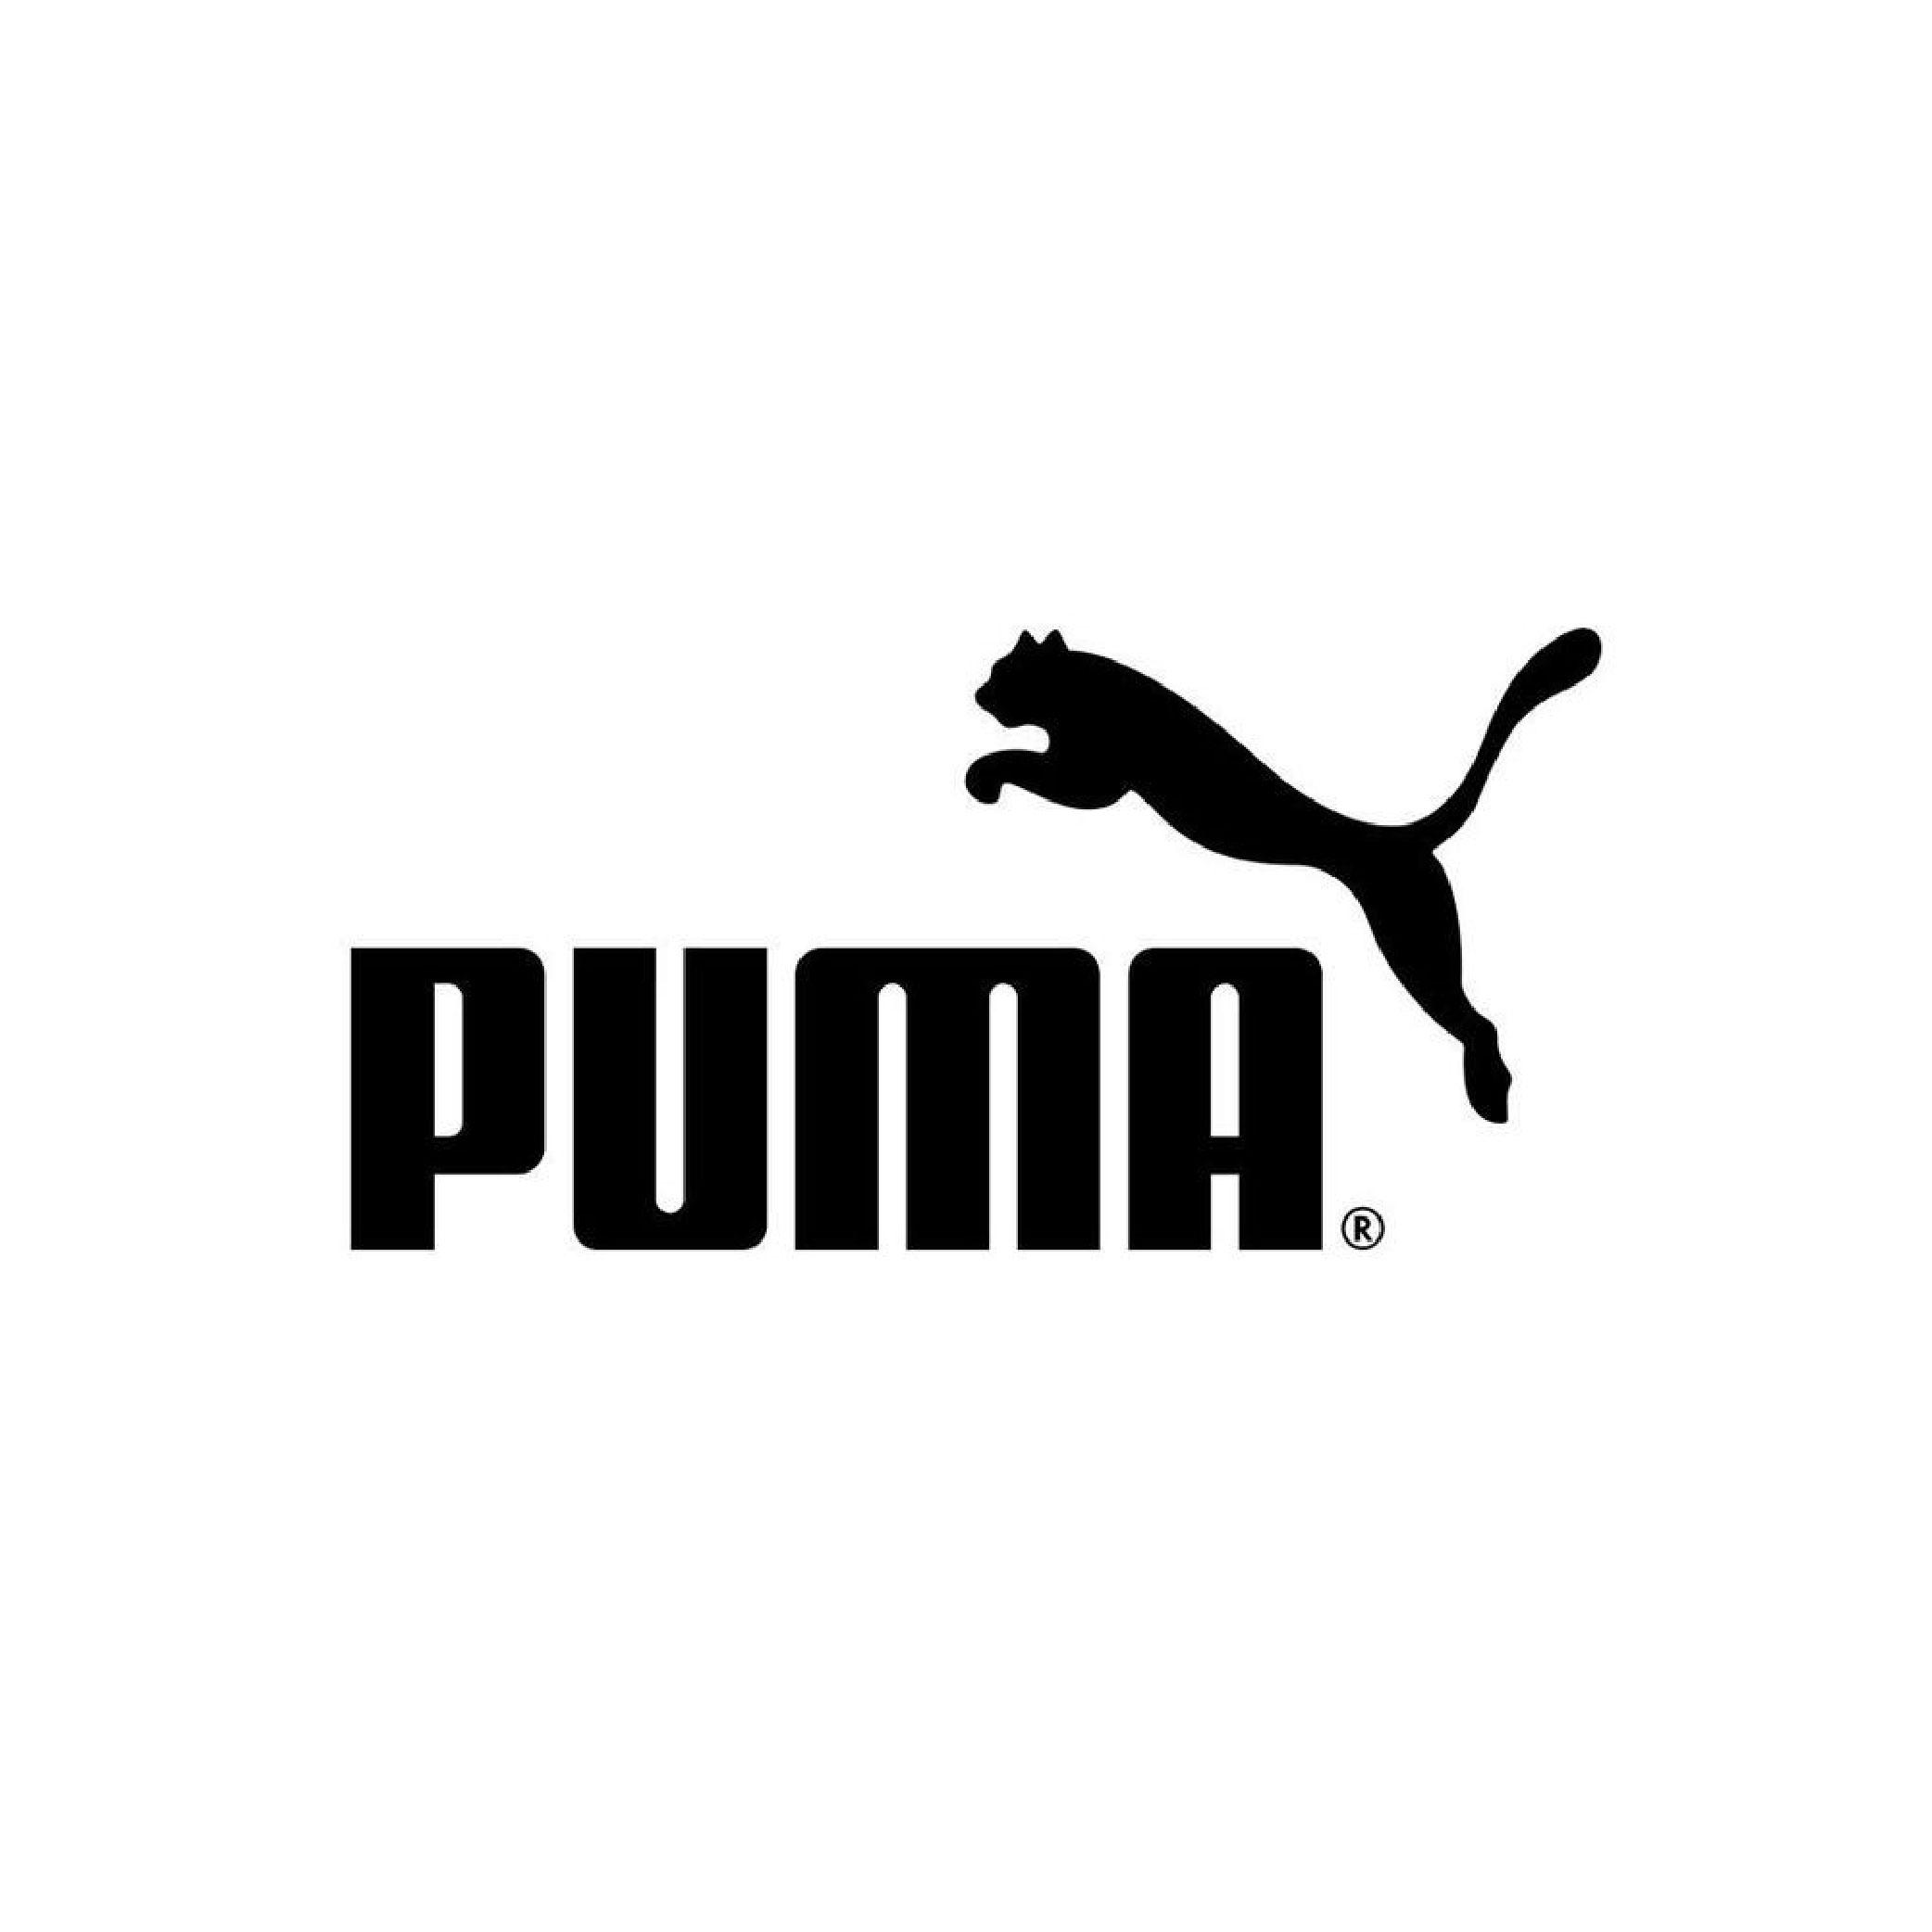 Buy Original Puma Products At Best Price in Tanzania